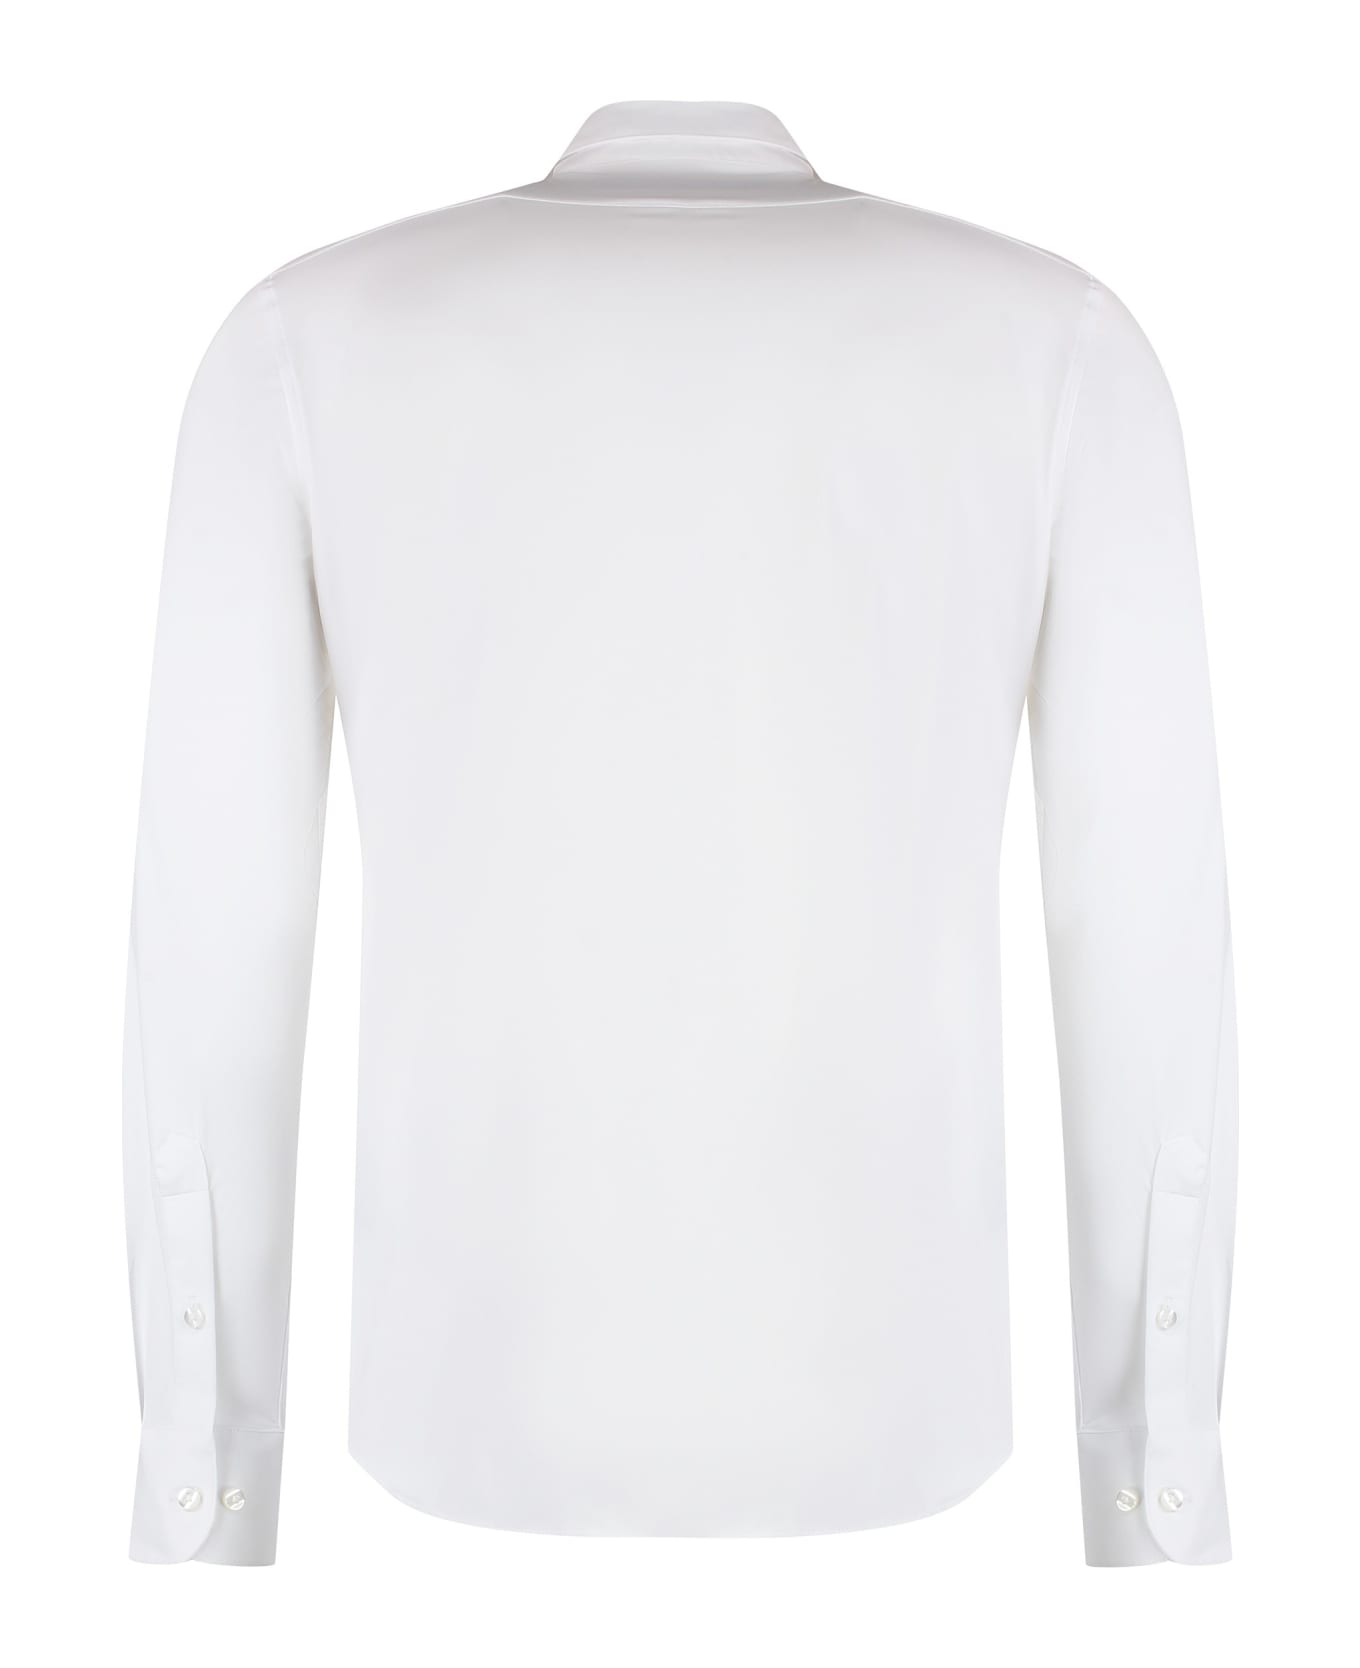 RRD - Roberto Ricci Design Technical Fabric Shirt - Bianco